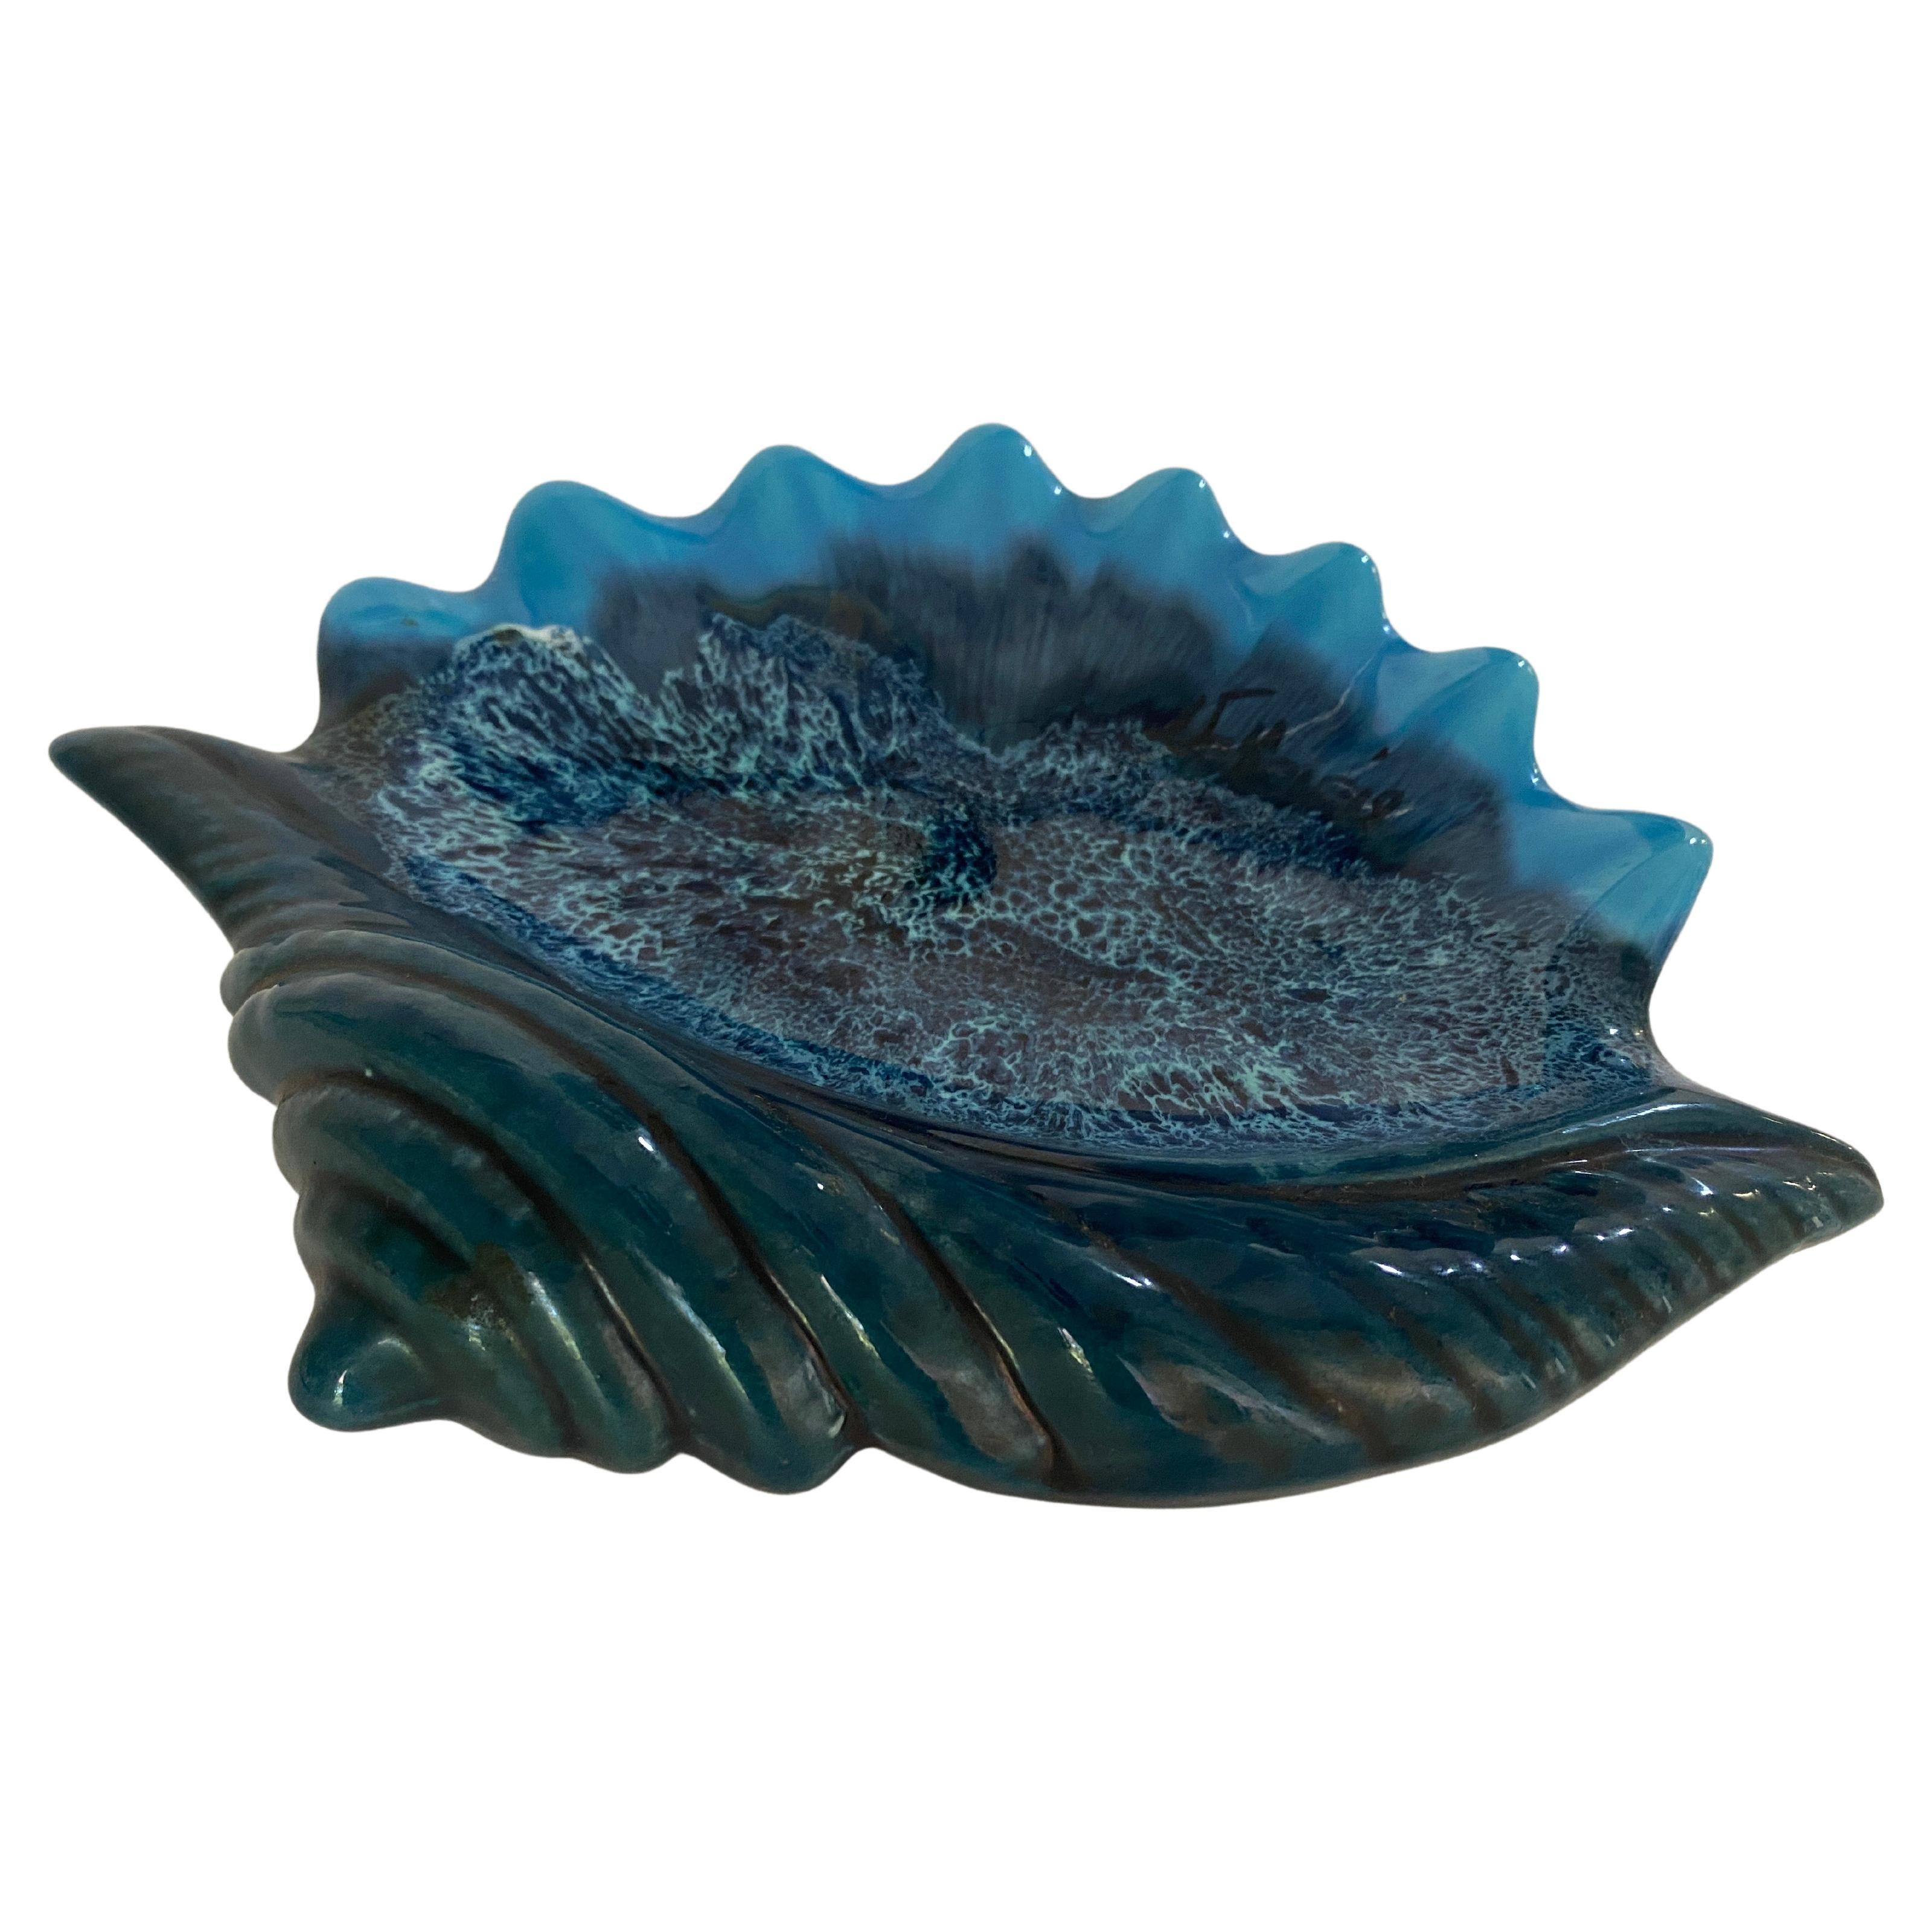 Ceramic Blue Ashtray or Vide Poche in a Shell Form Circa 1960 France For Sale